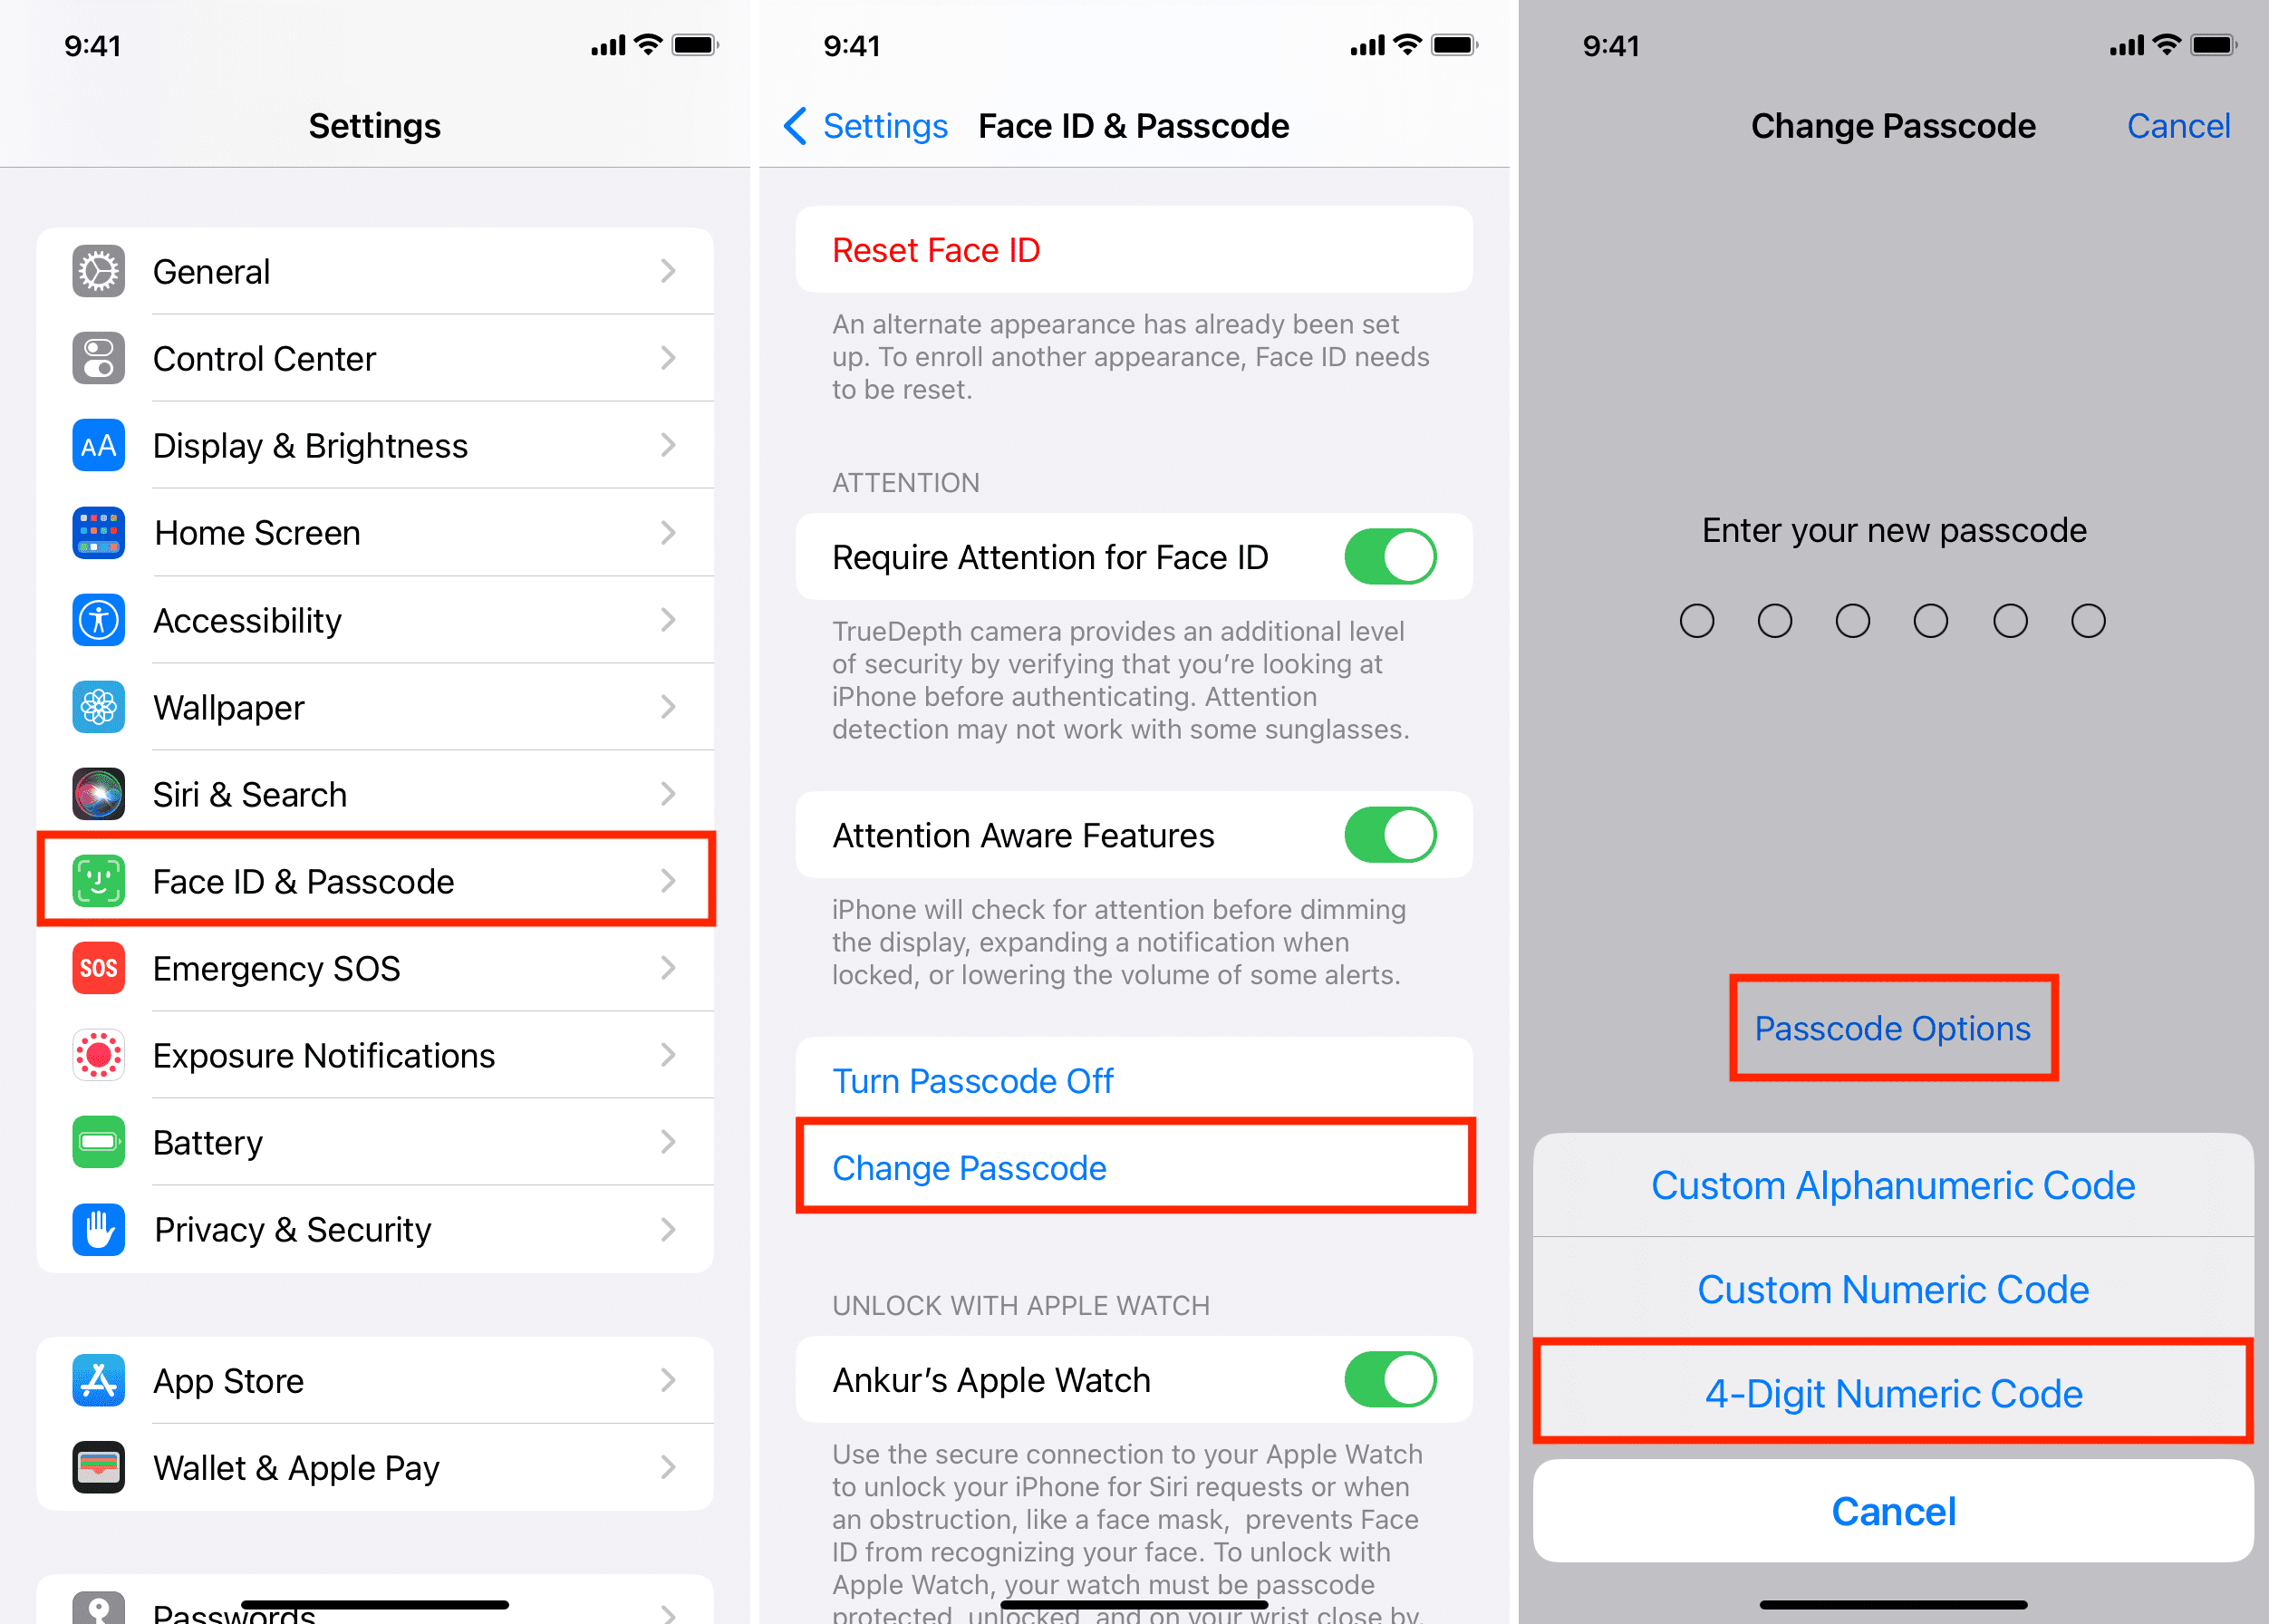 4-Digit Numeric Code in iPhone passcode settings